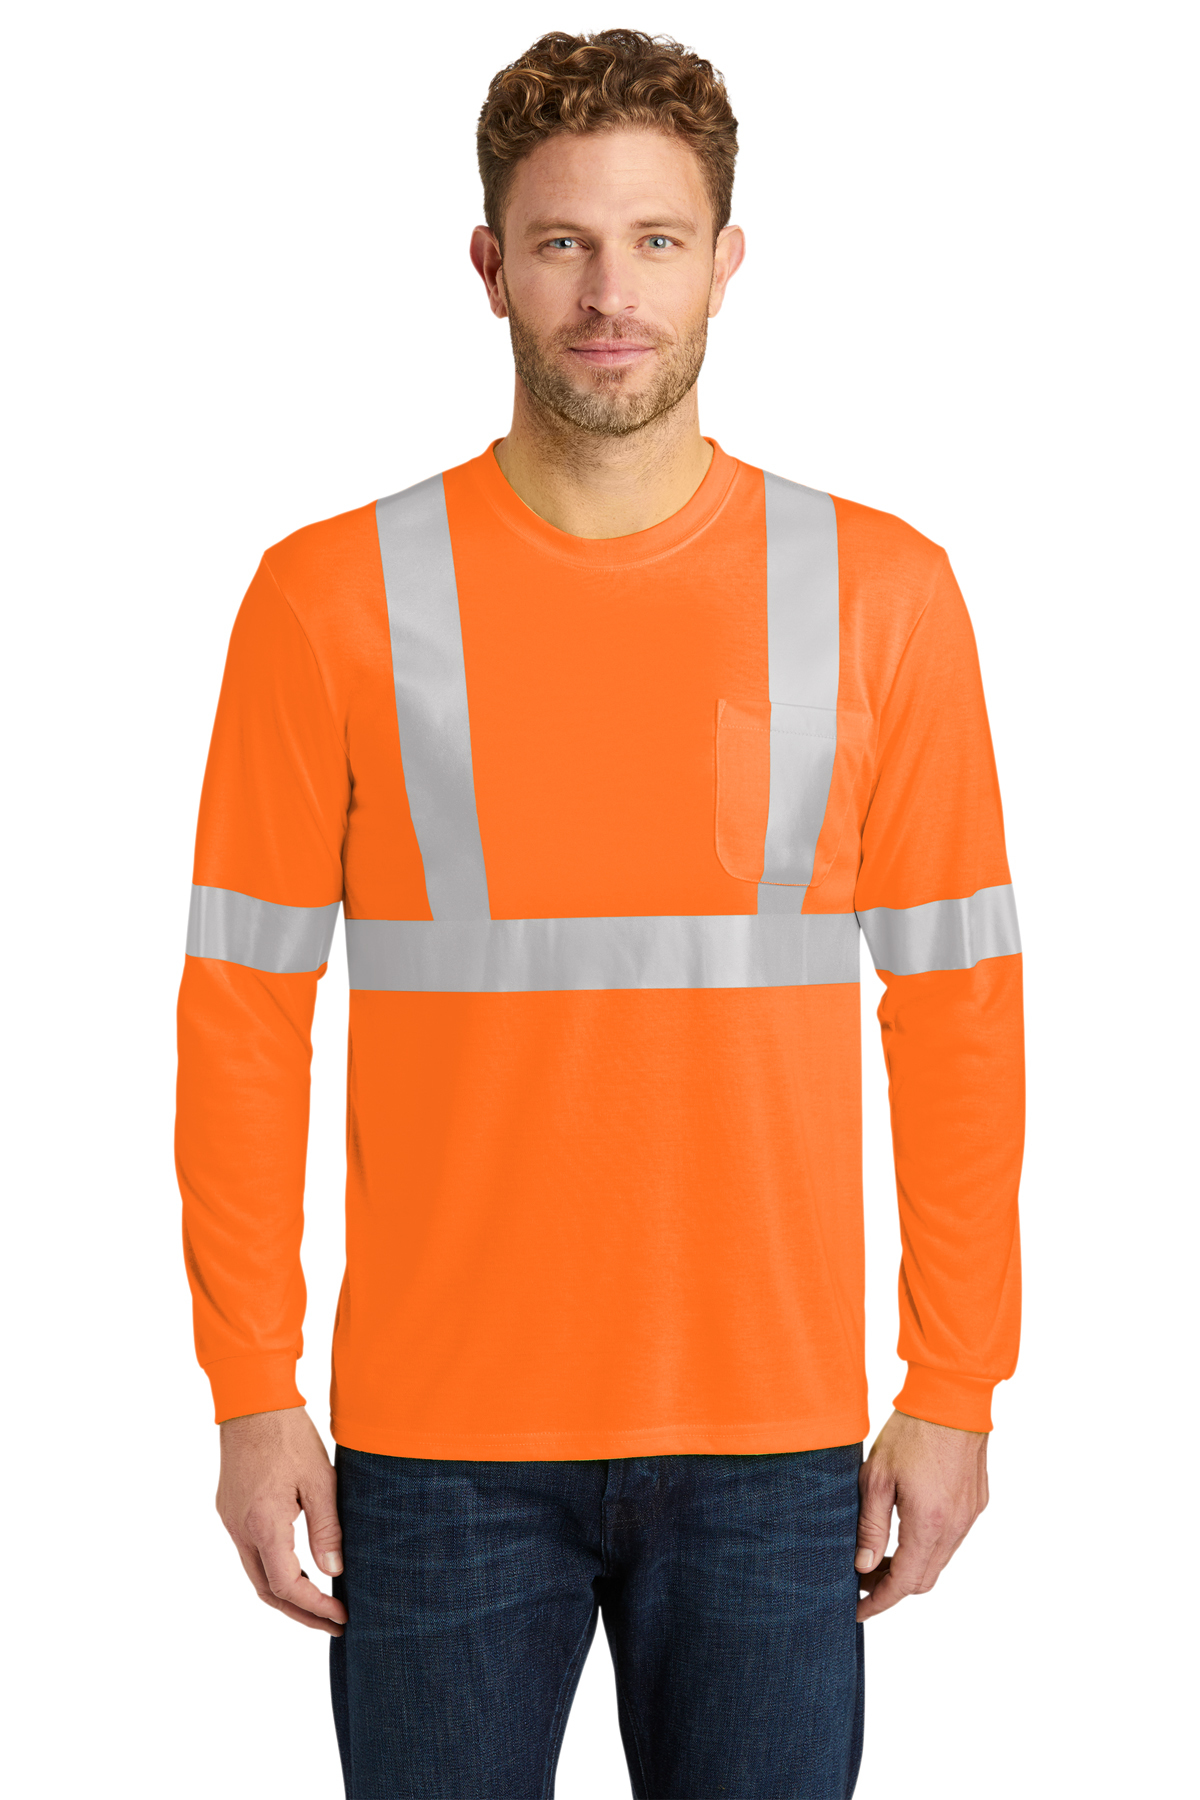 skab Bemyndige tro på CornerStone ANSI 107 Class 2 Long Sleeve Safety T-Shirt | Product |  CornerStone